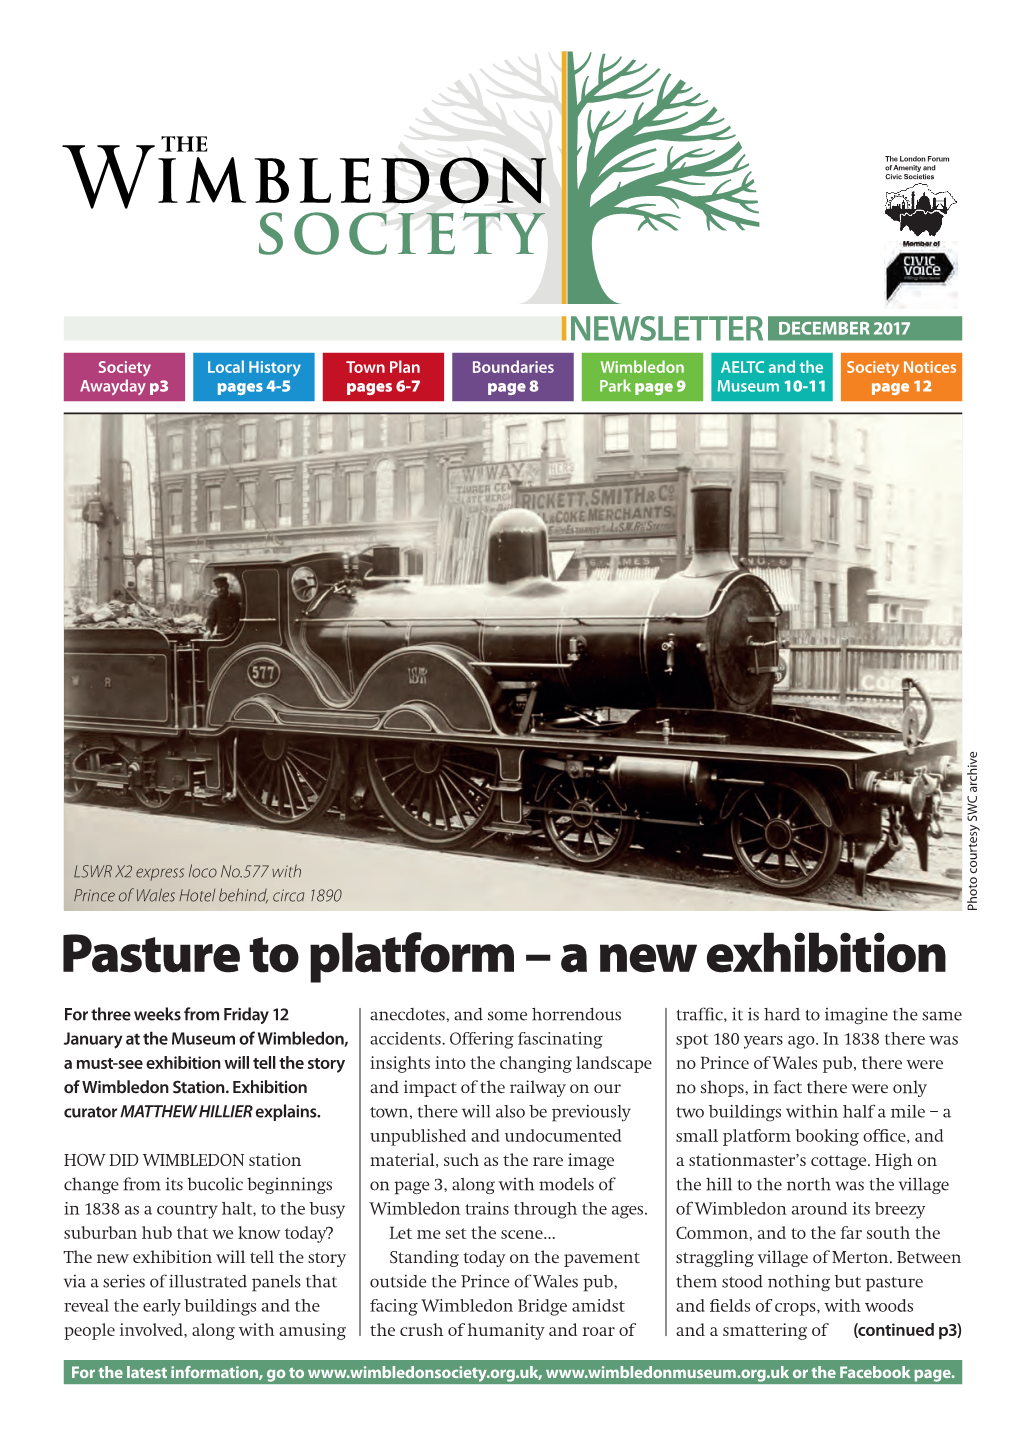 Pasture to Platform – a New Exhibition